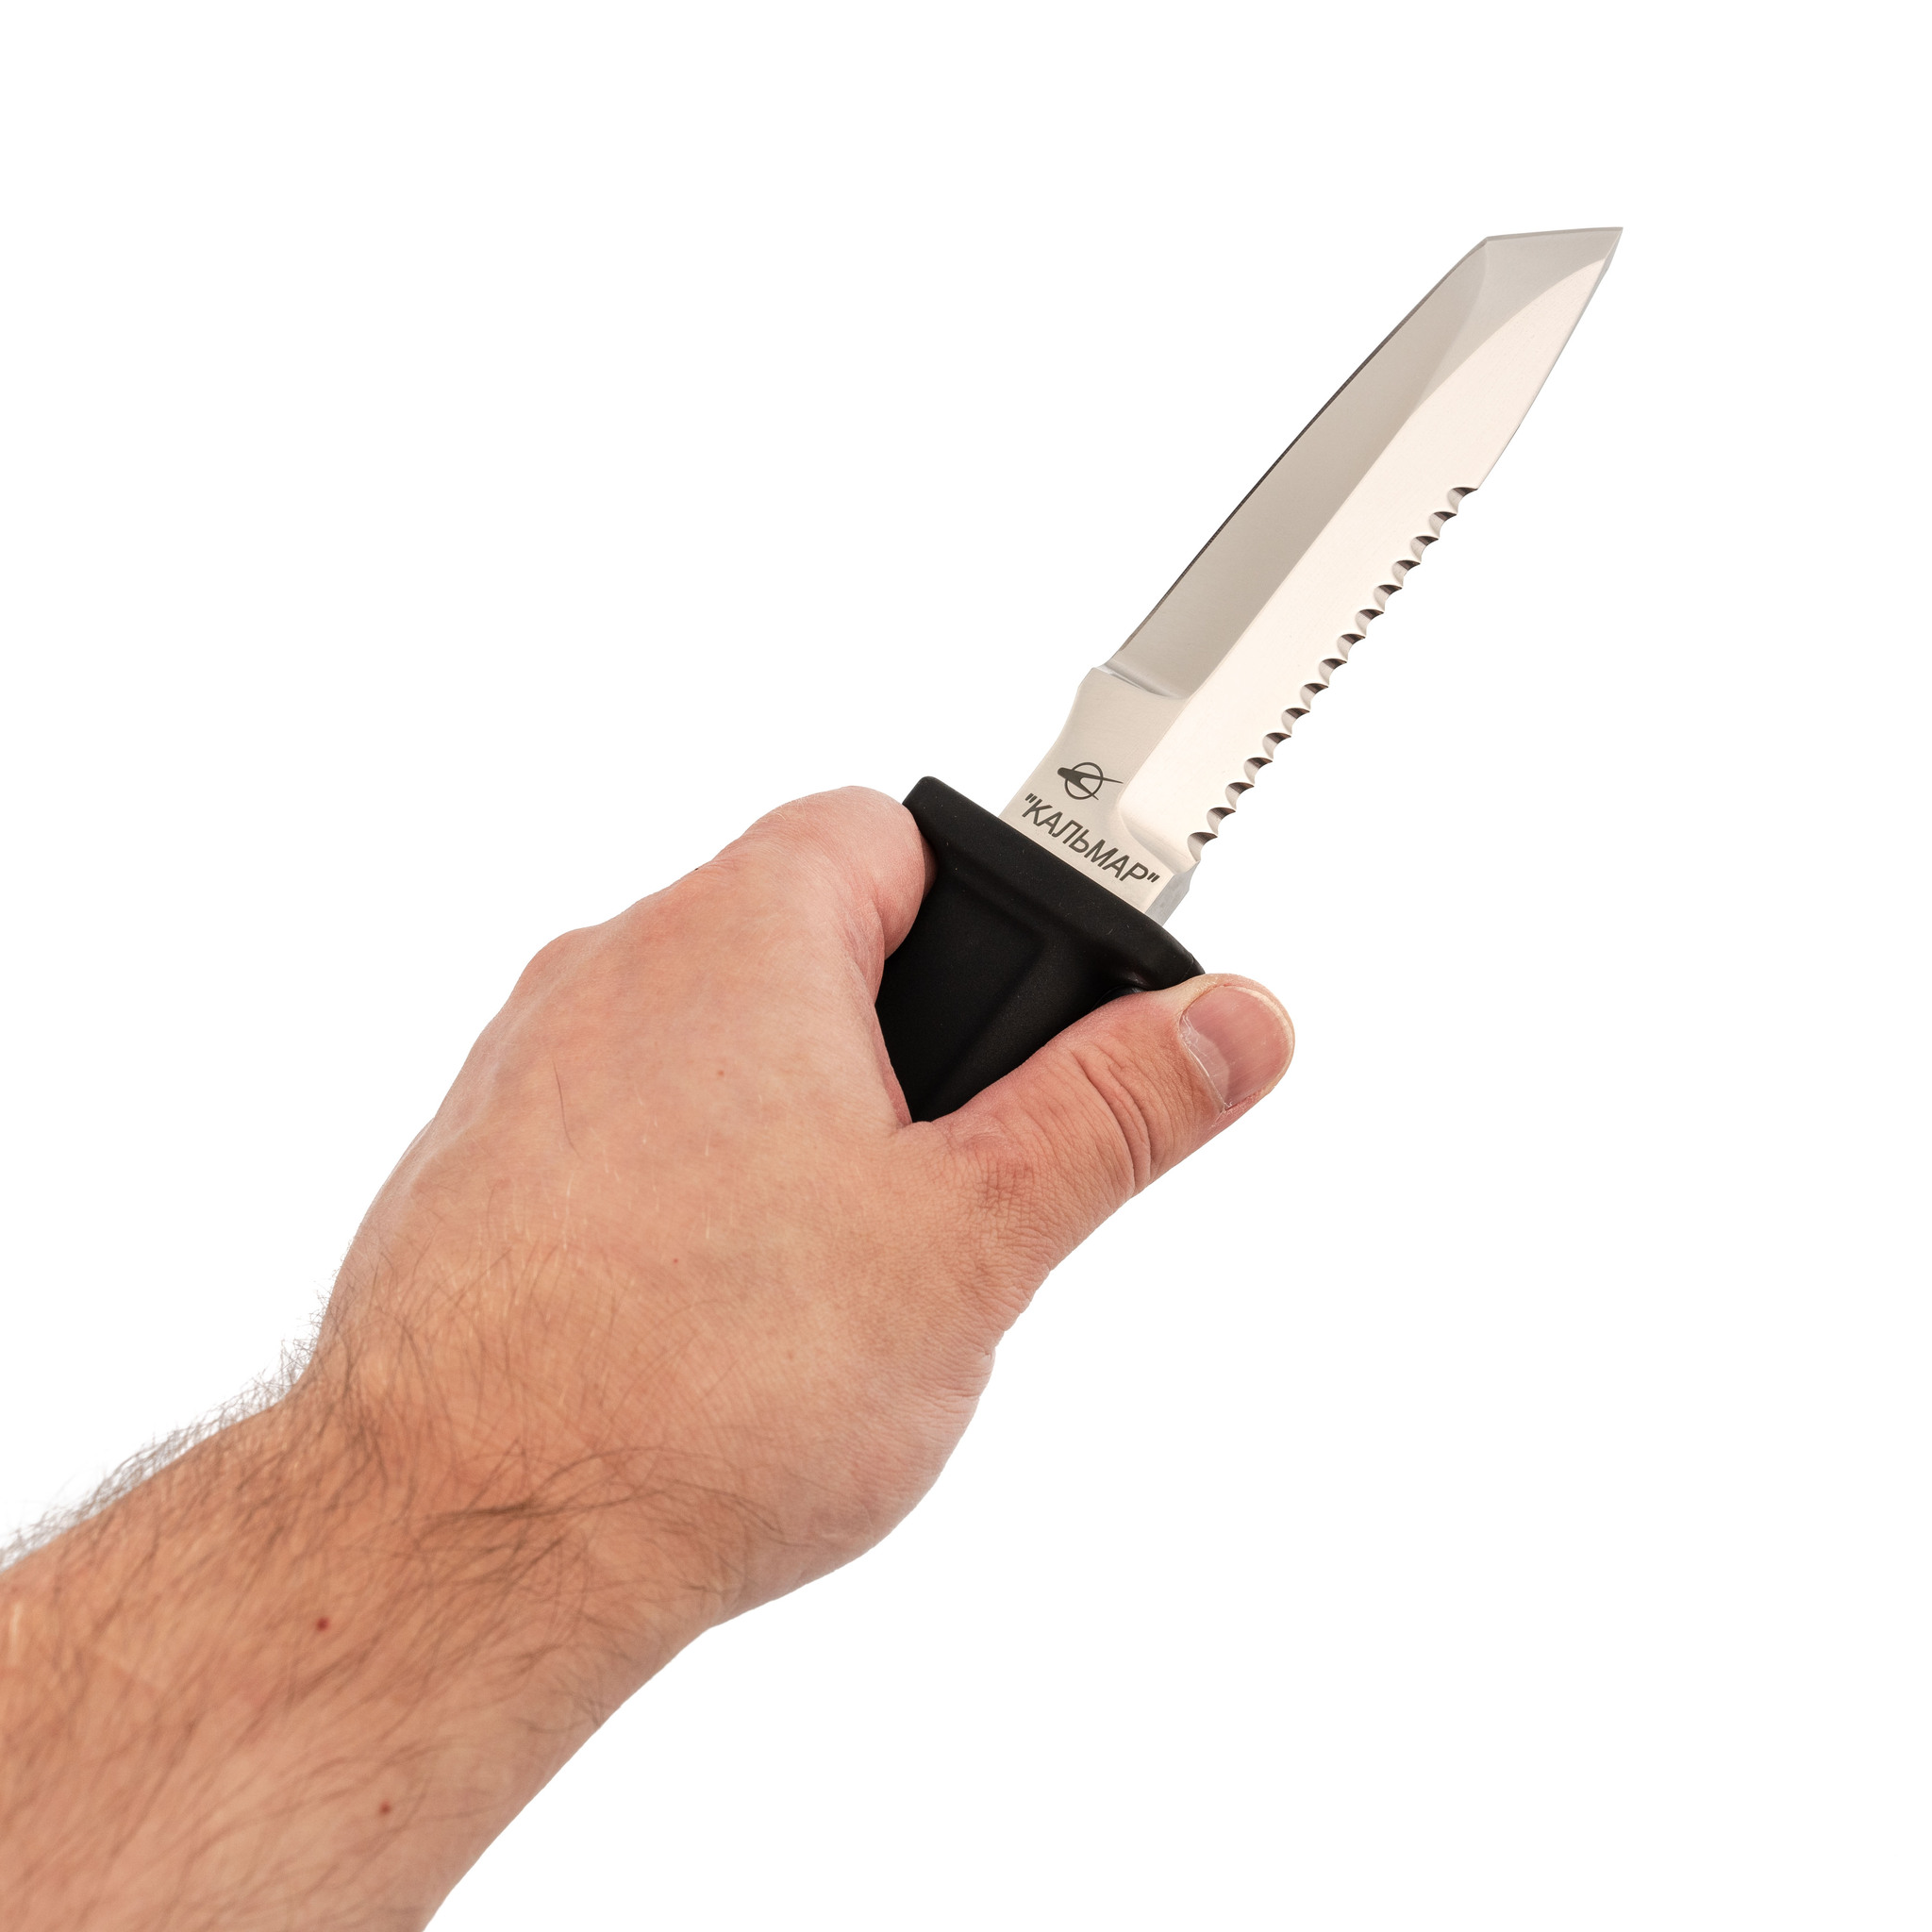 Нож водолазный Дайвер, сталь 95х18, рукоять термоэластопласт, пластиковые ножны - фото 6